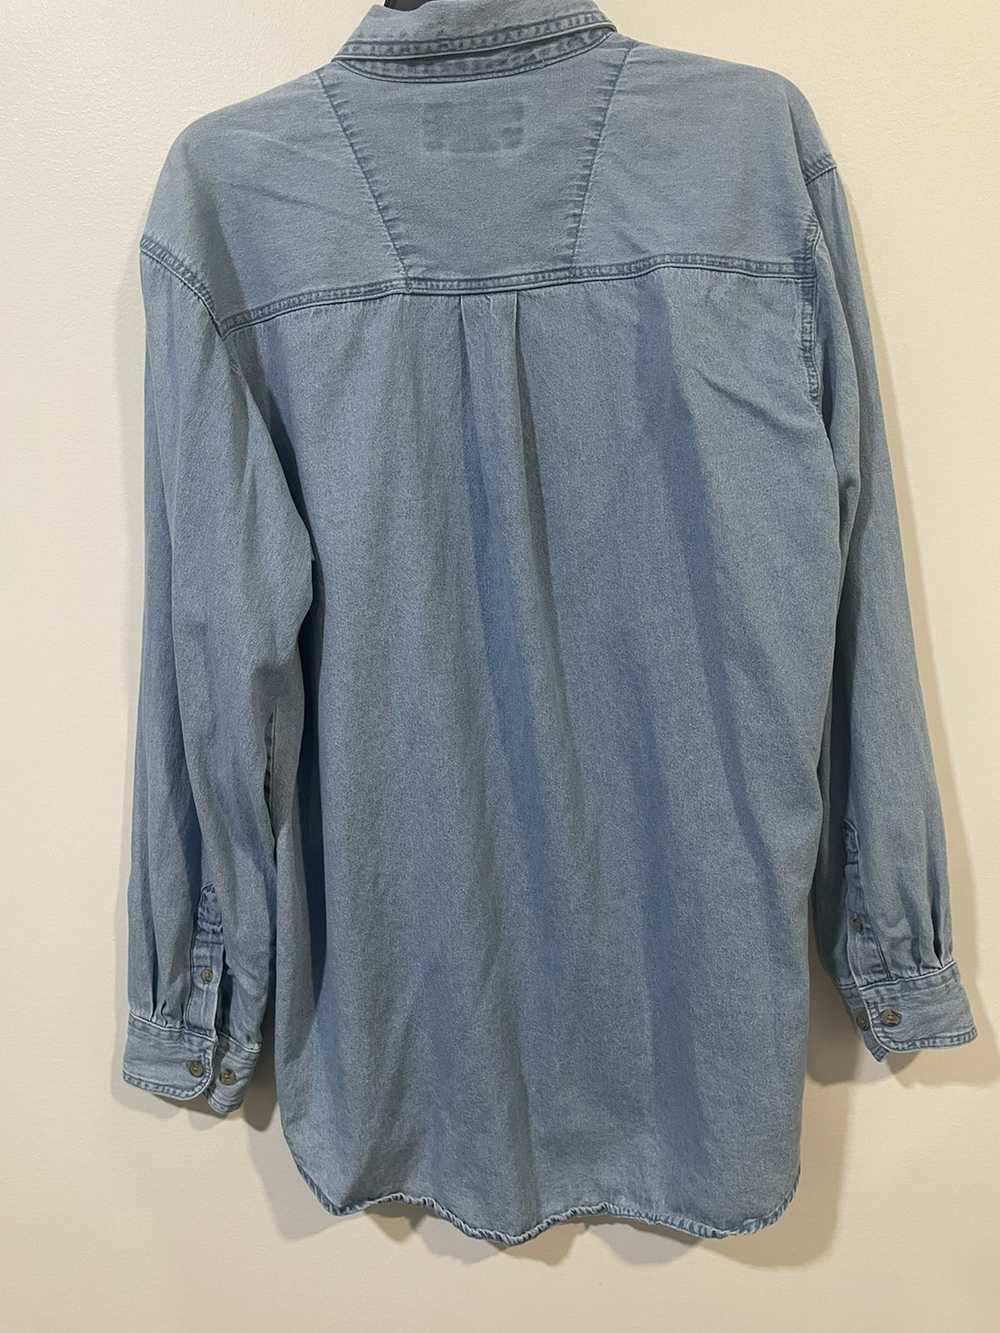 Wrangler Vintage Wrangler Denim Button Up Shirt - image 2